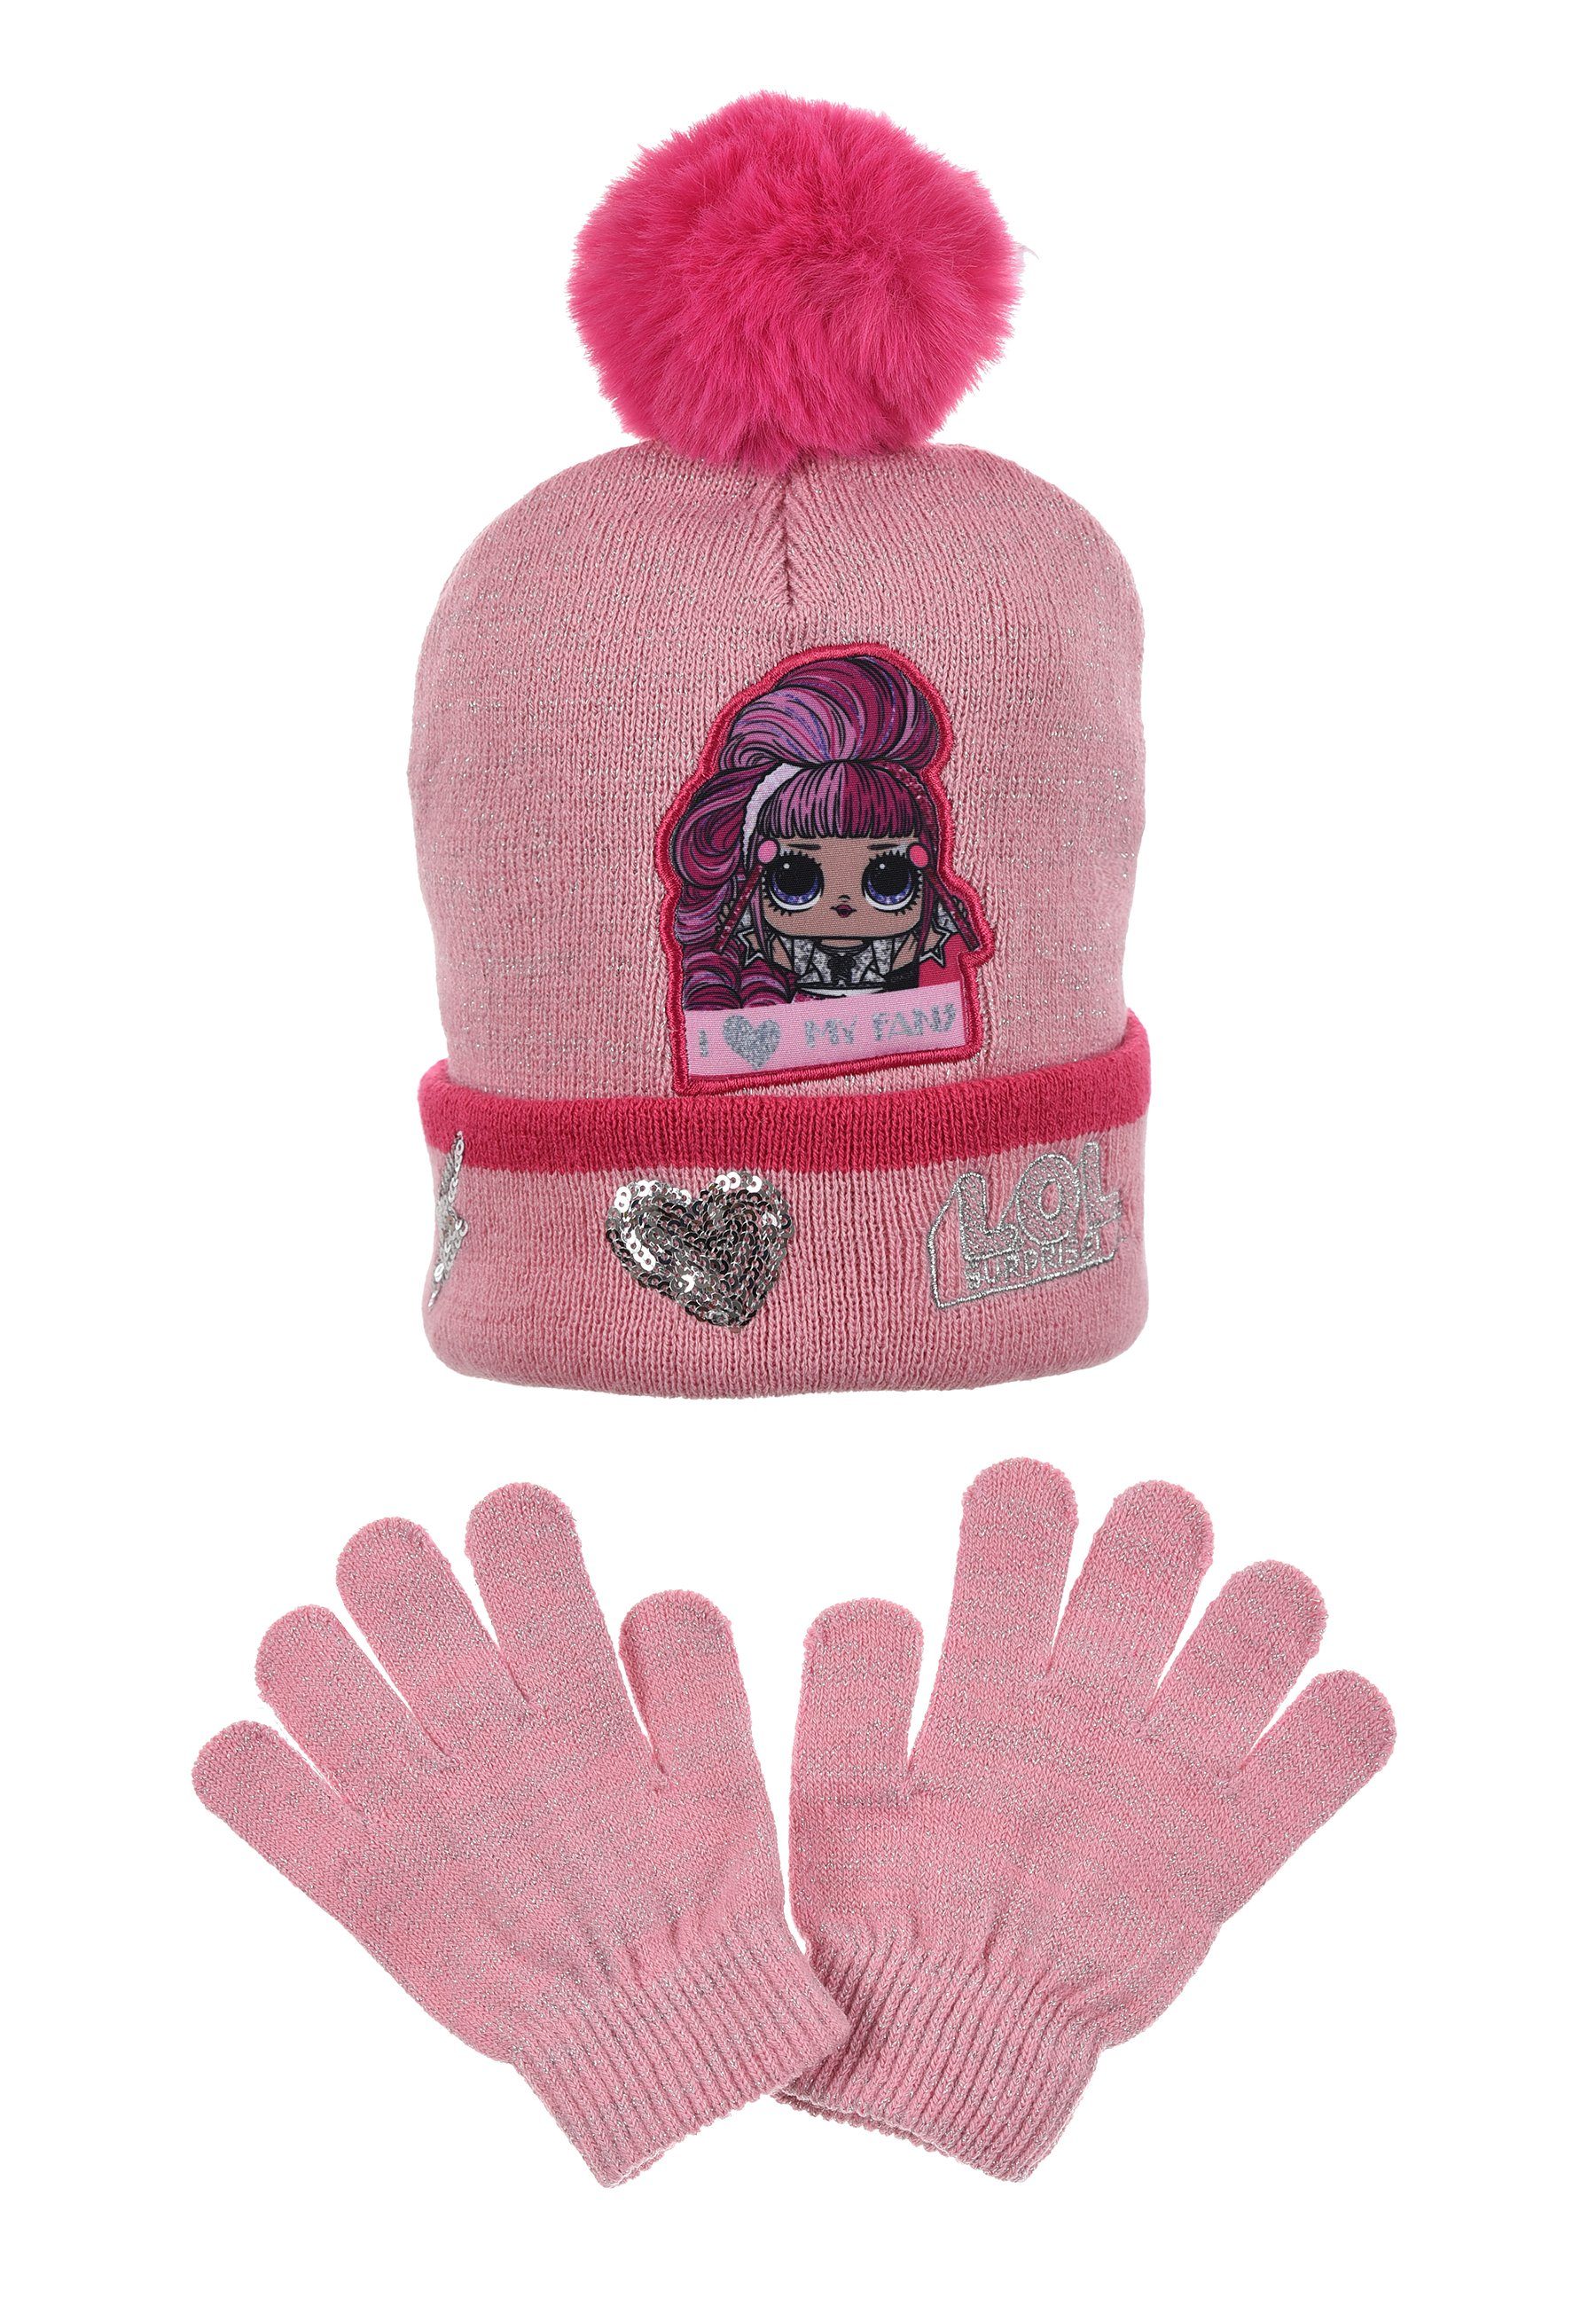 L.O.L. SURPRISE! Bommelmütze Kinder Mädchen Winter-Set Winter-Mütze + Handschuhe Bommel in Rosa